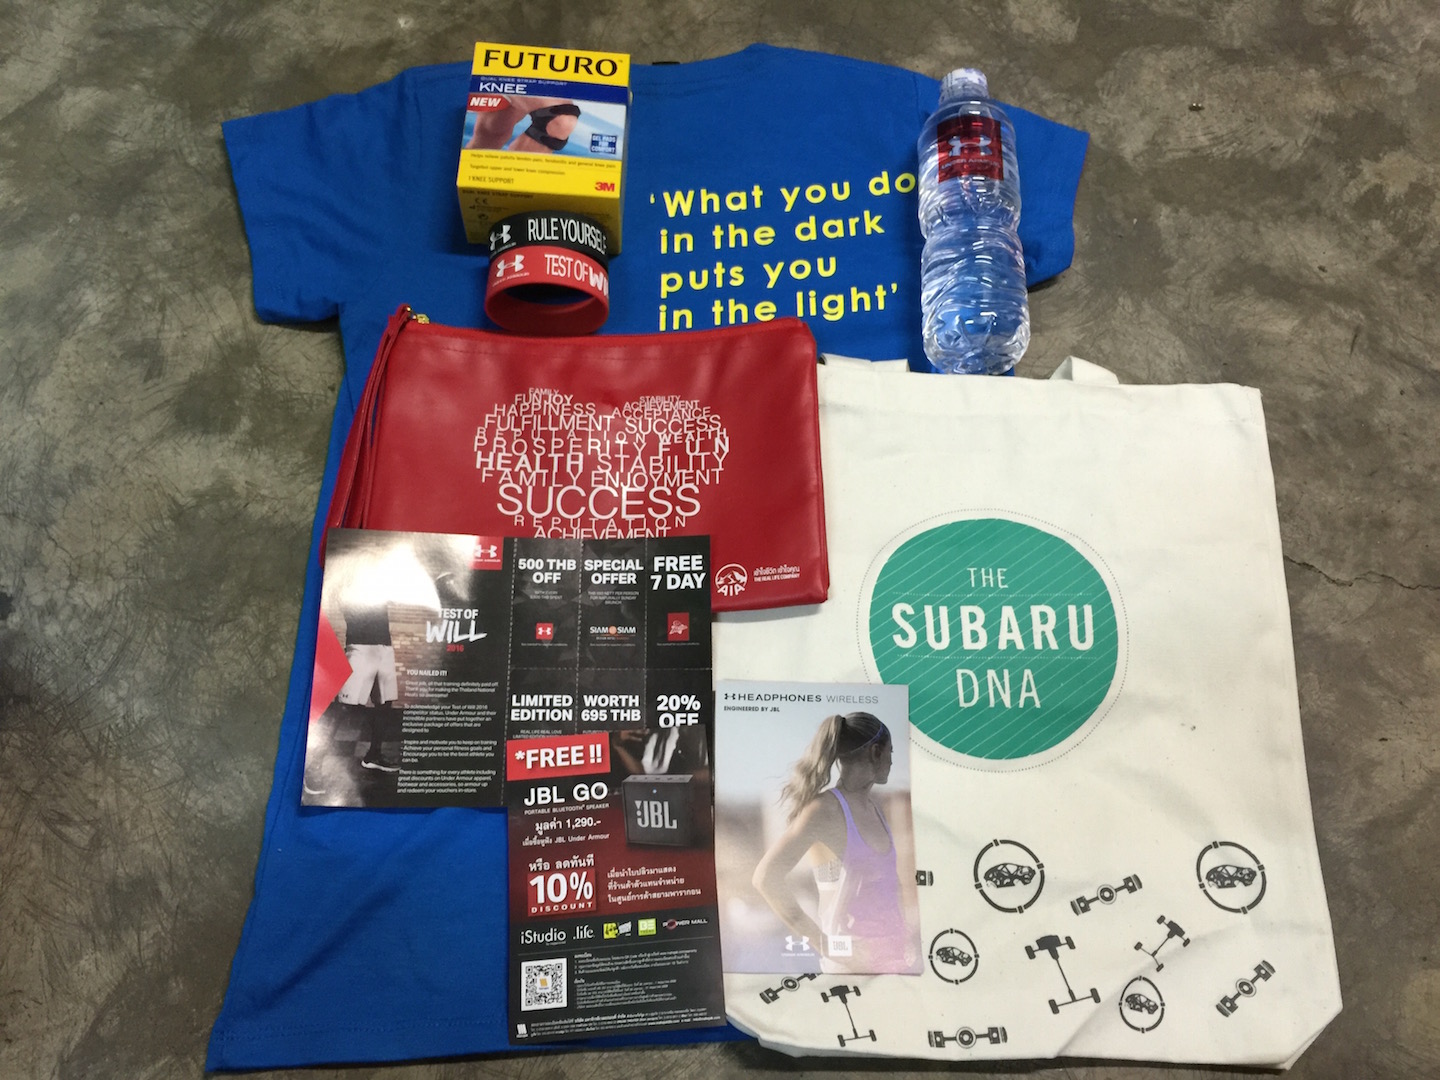 T-shirts, wrist band discount coupon JBL & Under Armour, Futuro knee supporter, AIA bag, & Subaru bag